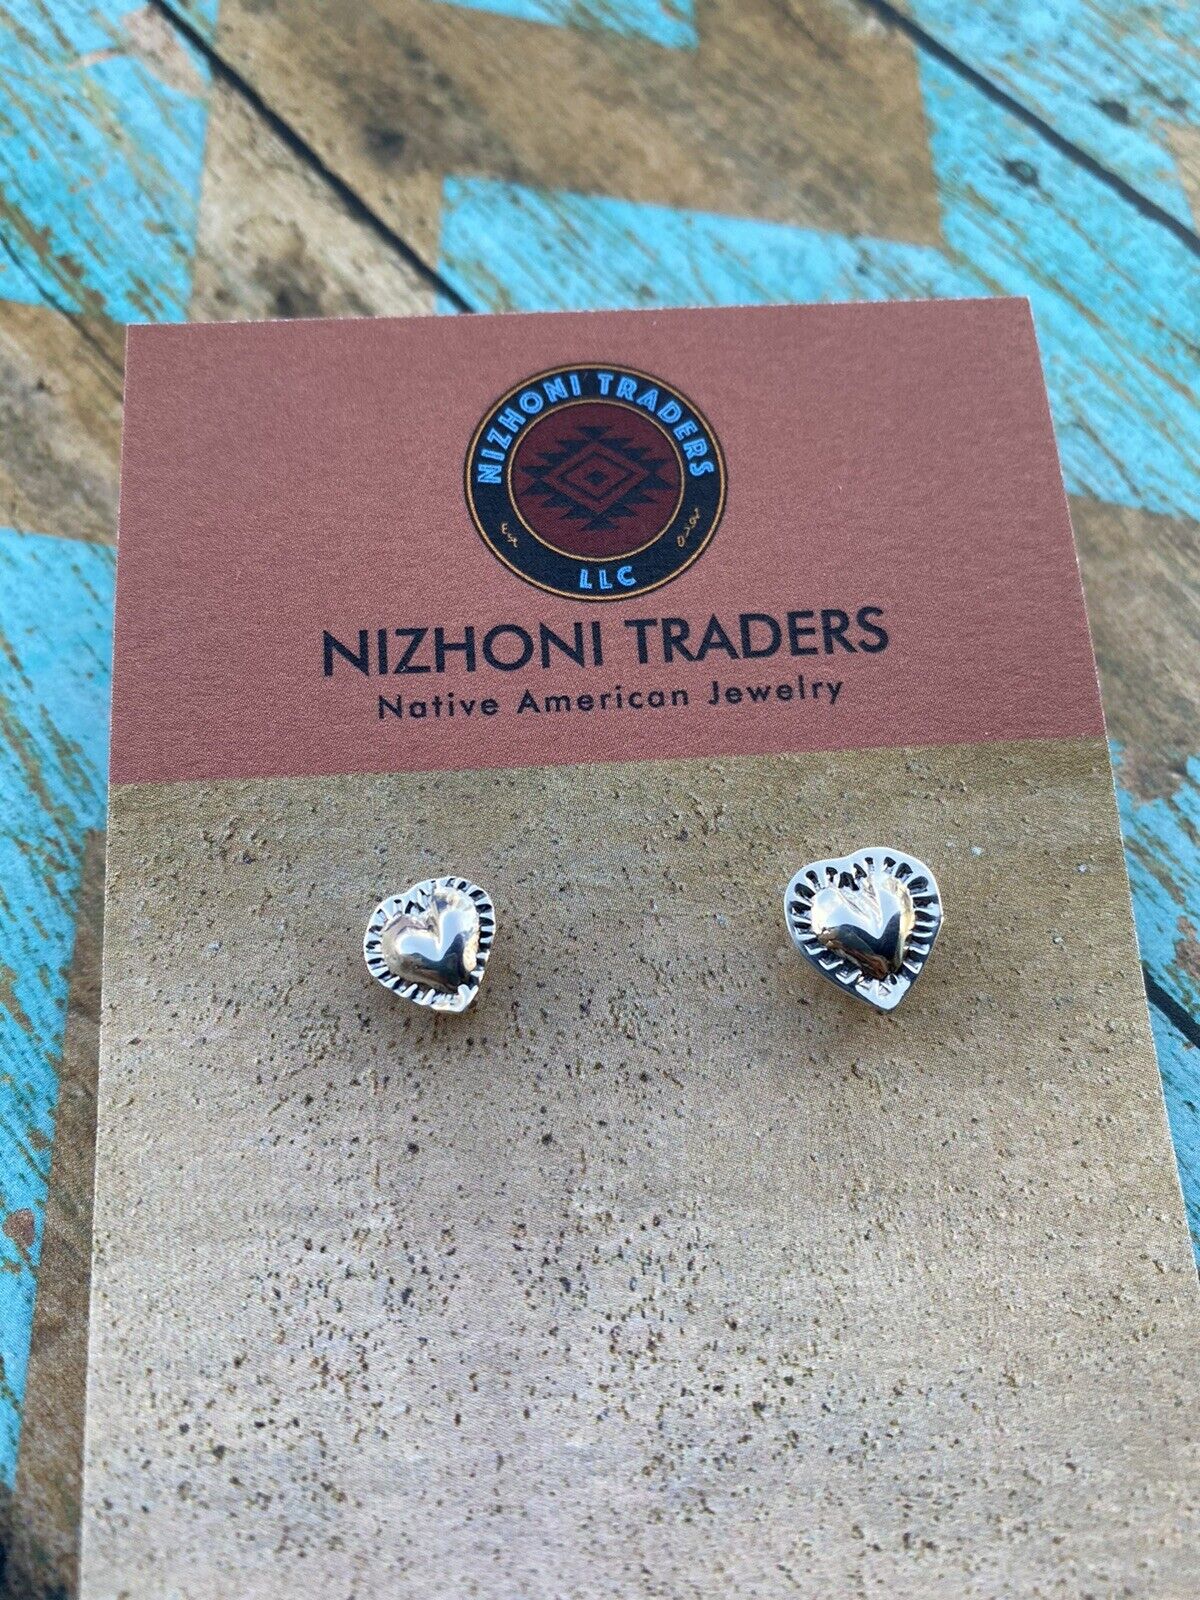 Navajo Sterling Silver Handmade Heart Shape Post Earring Adaptors